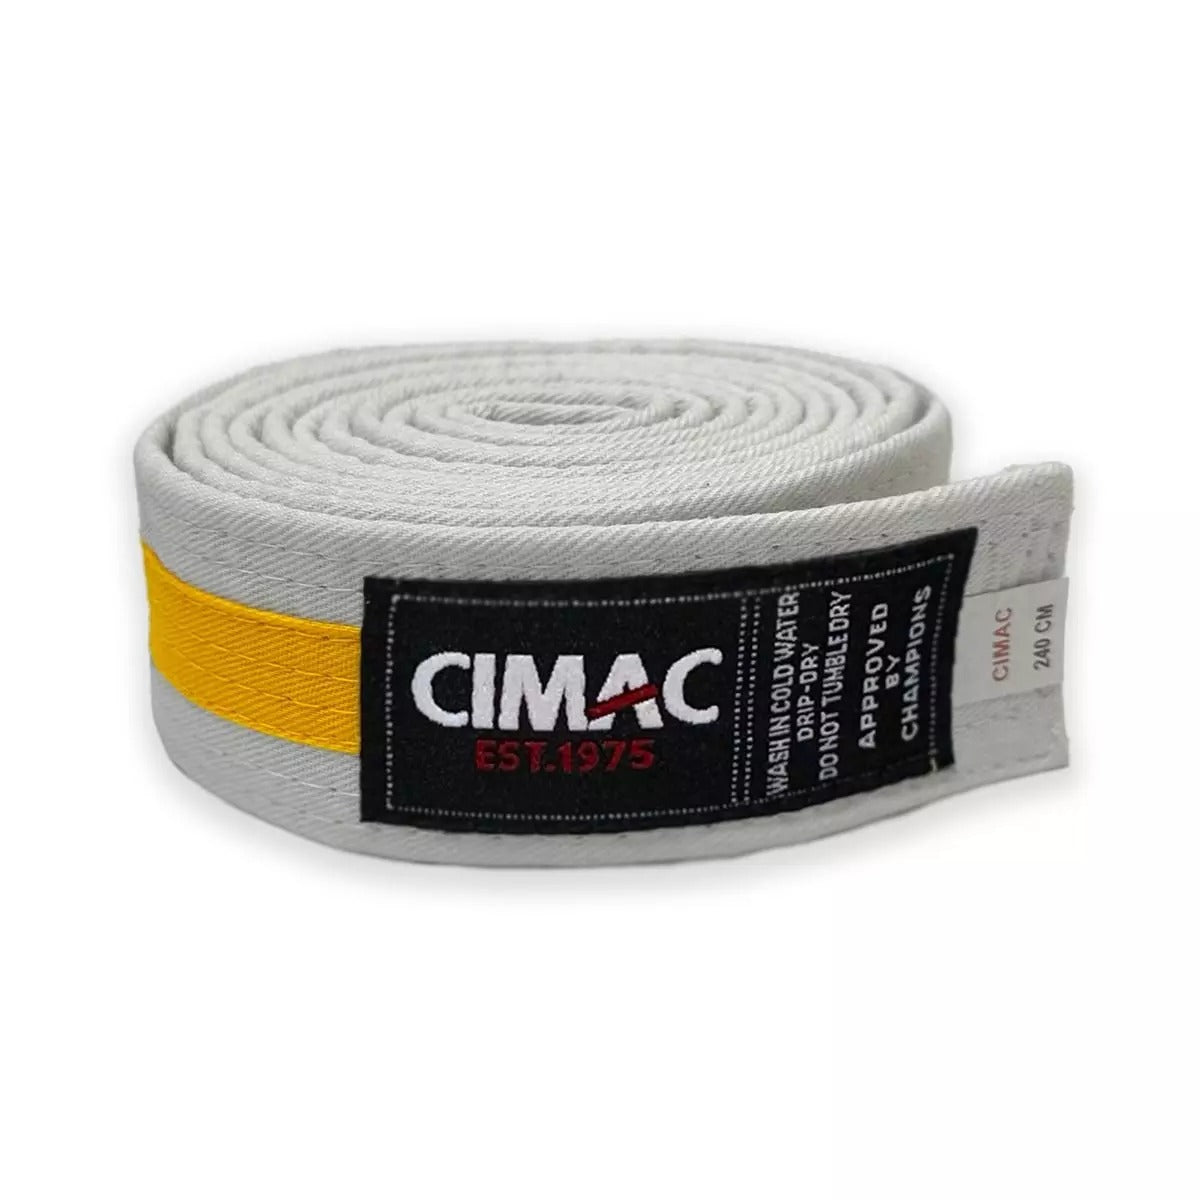 Cimac Colour Striped White Karate Belt Martial Arts